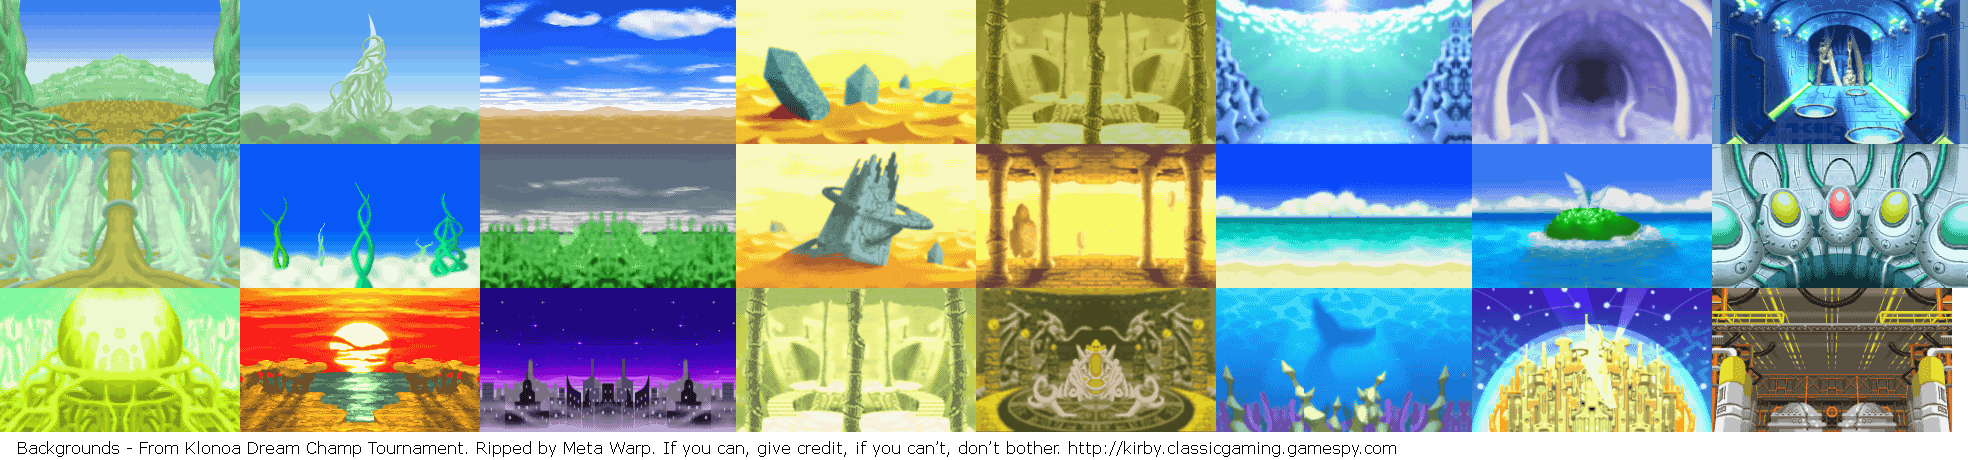 Klonoa 2: Dream Champ Tournament - Backgrounds